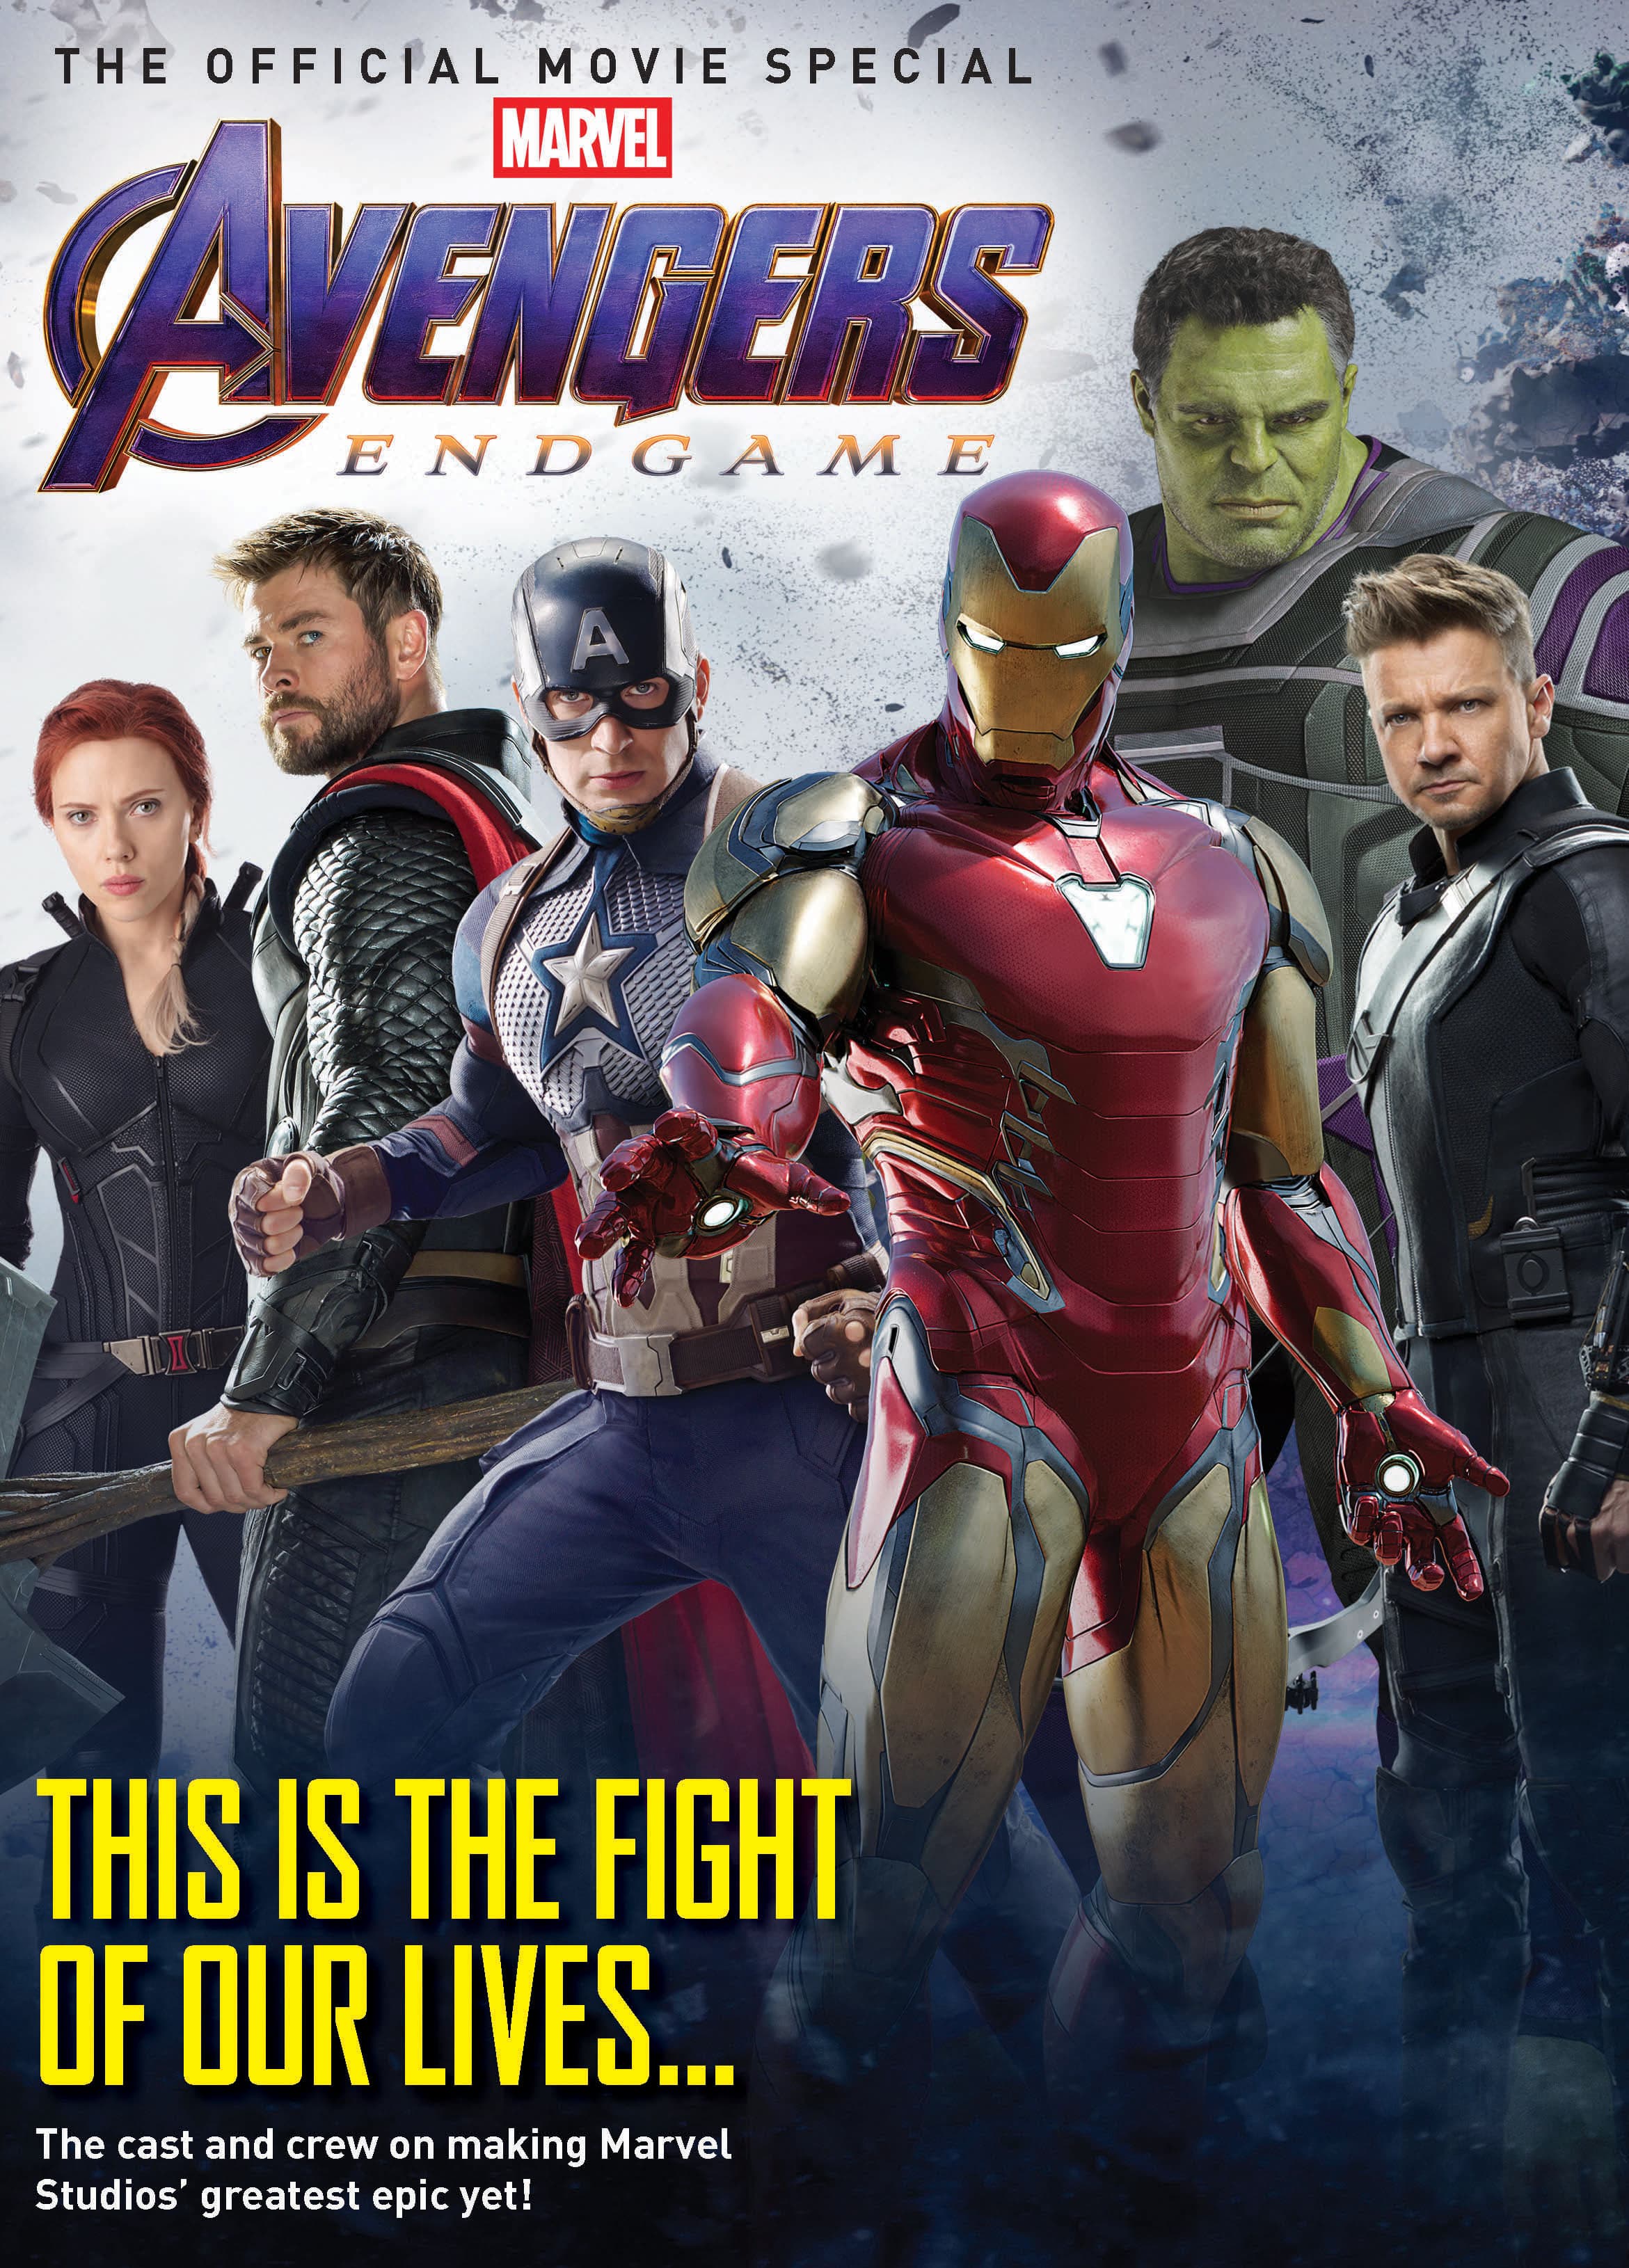 Is Avengers: Endgame the last Marvel movie for the original cast?